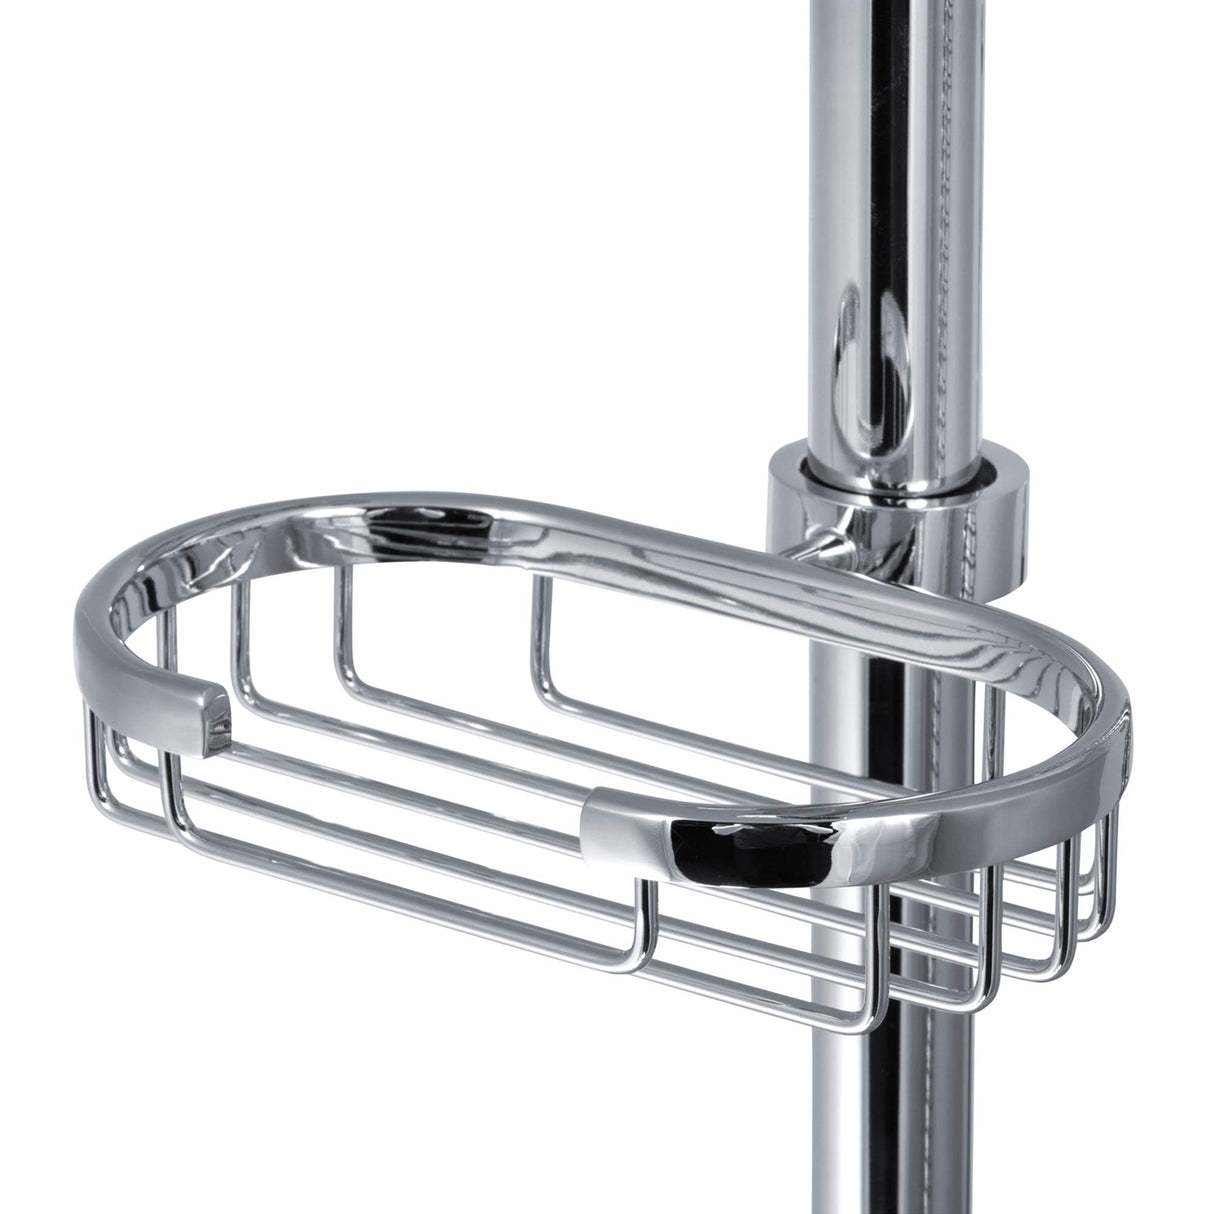 PULSE ShowerSpas 1010-CH Adjustable Slide Bar for Hand Shower with Wire Basket Soap Dish, Polished Chrome